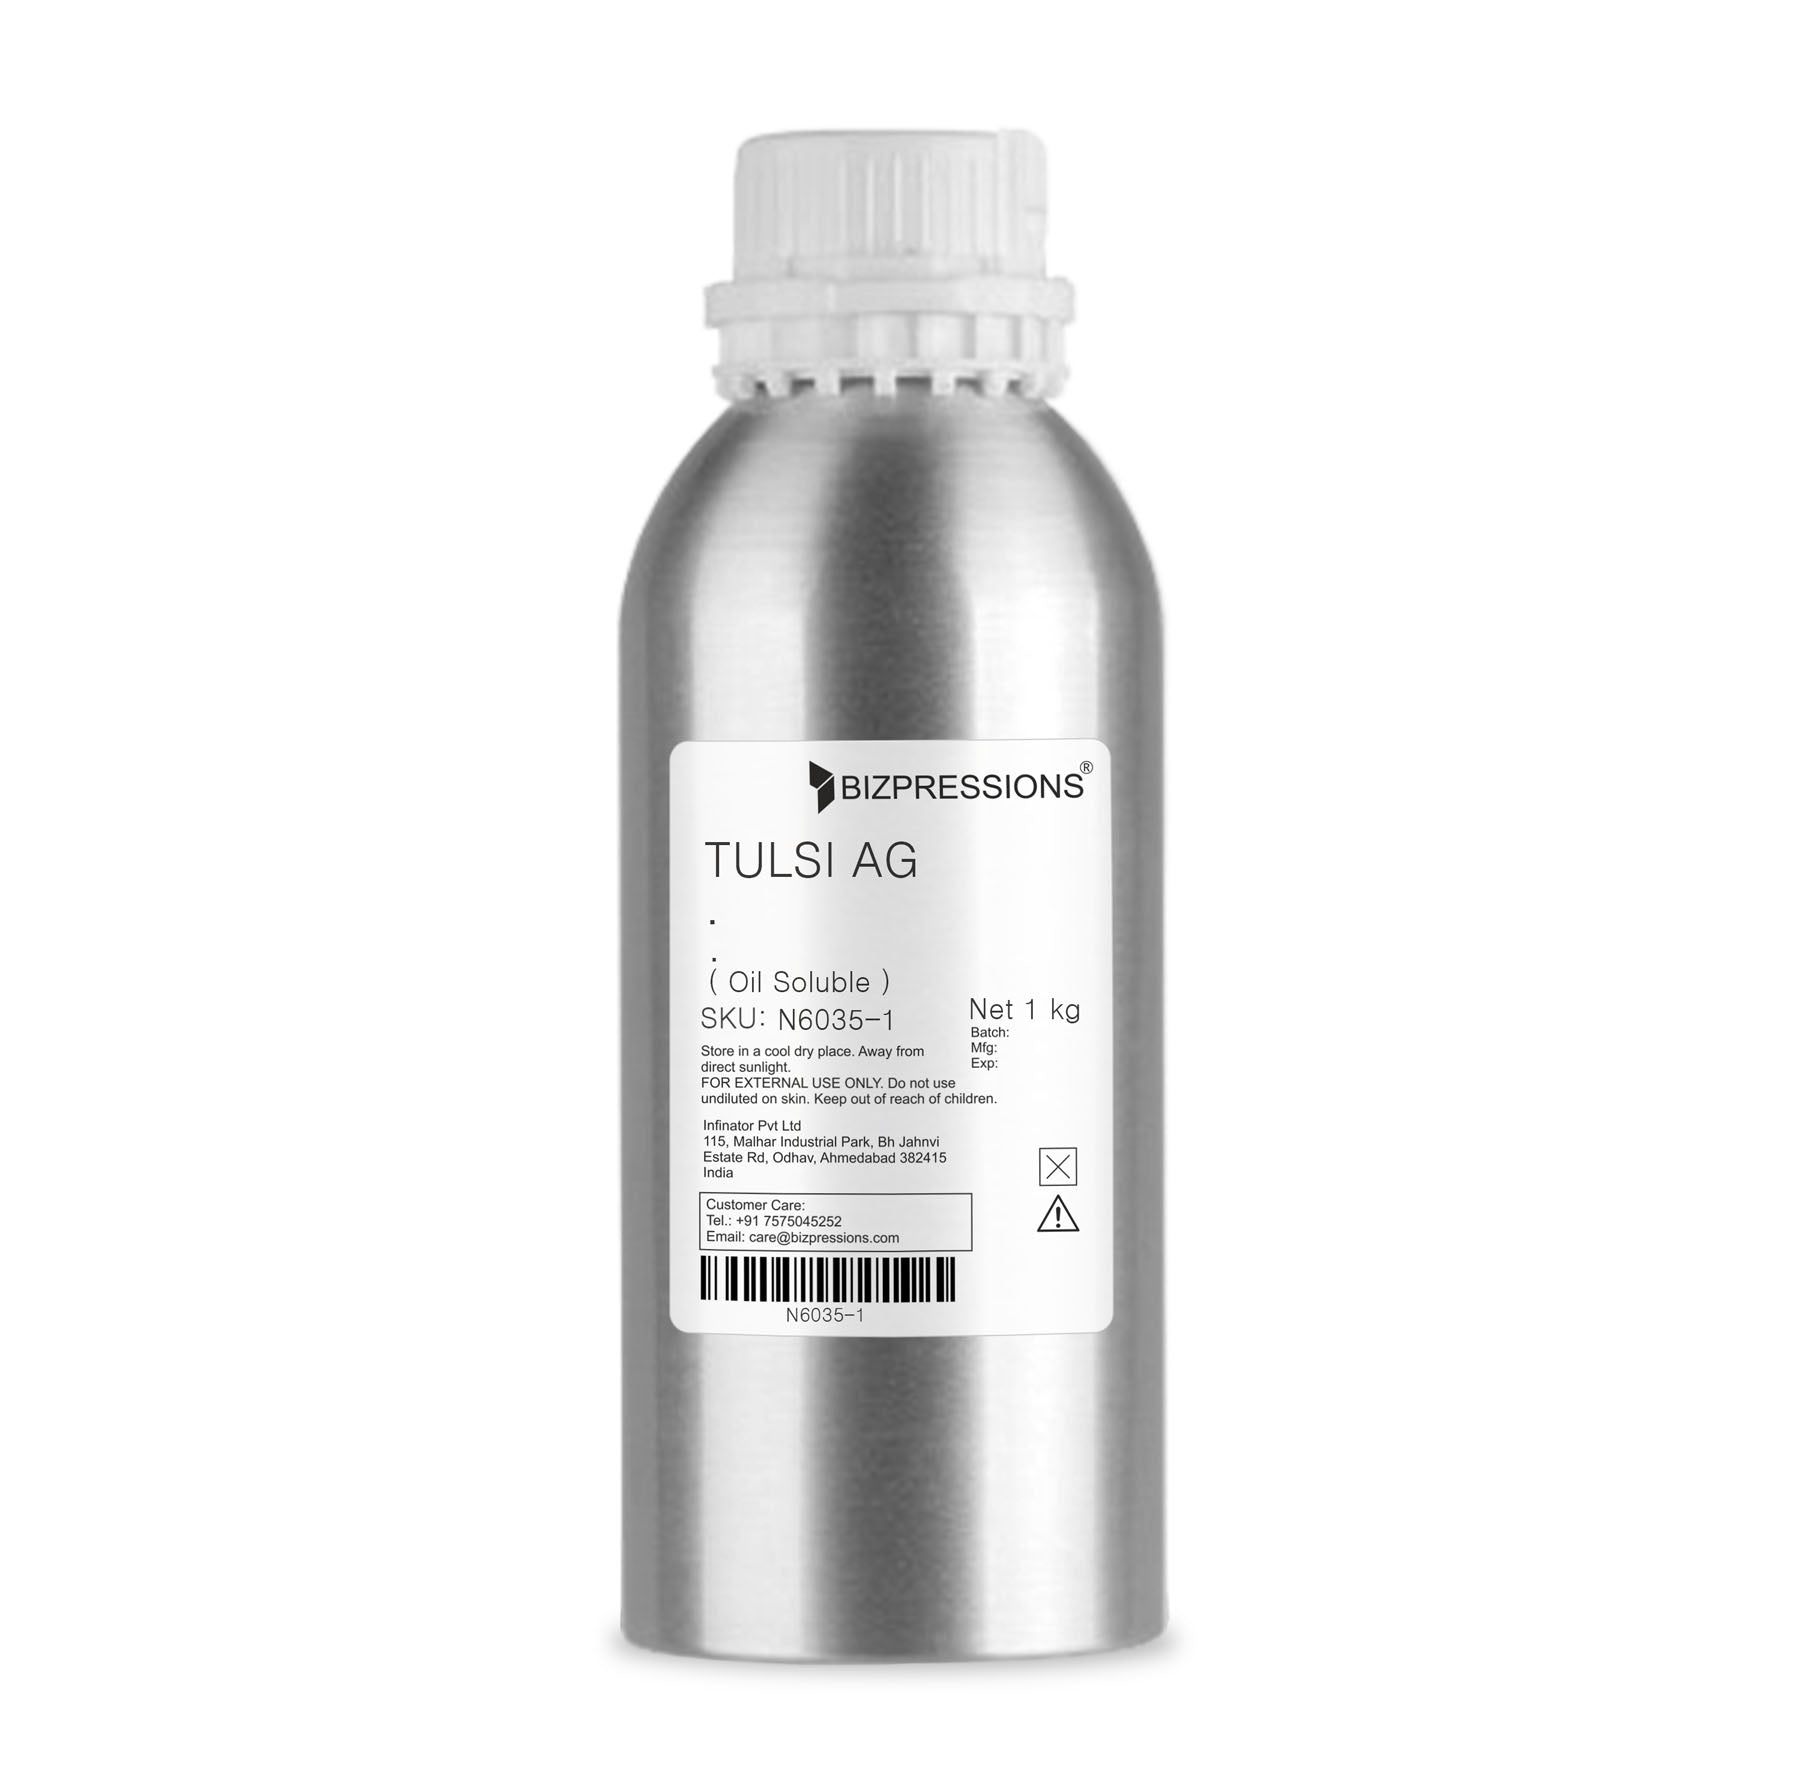 TULSI AG - Fragrance ( Oil Soluble ) - 1 kg